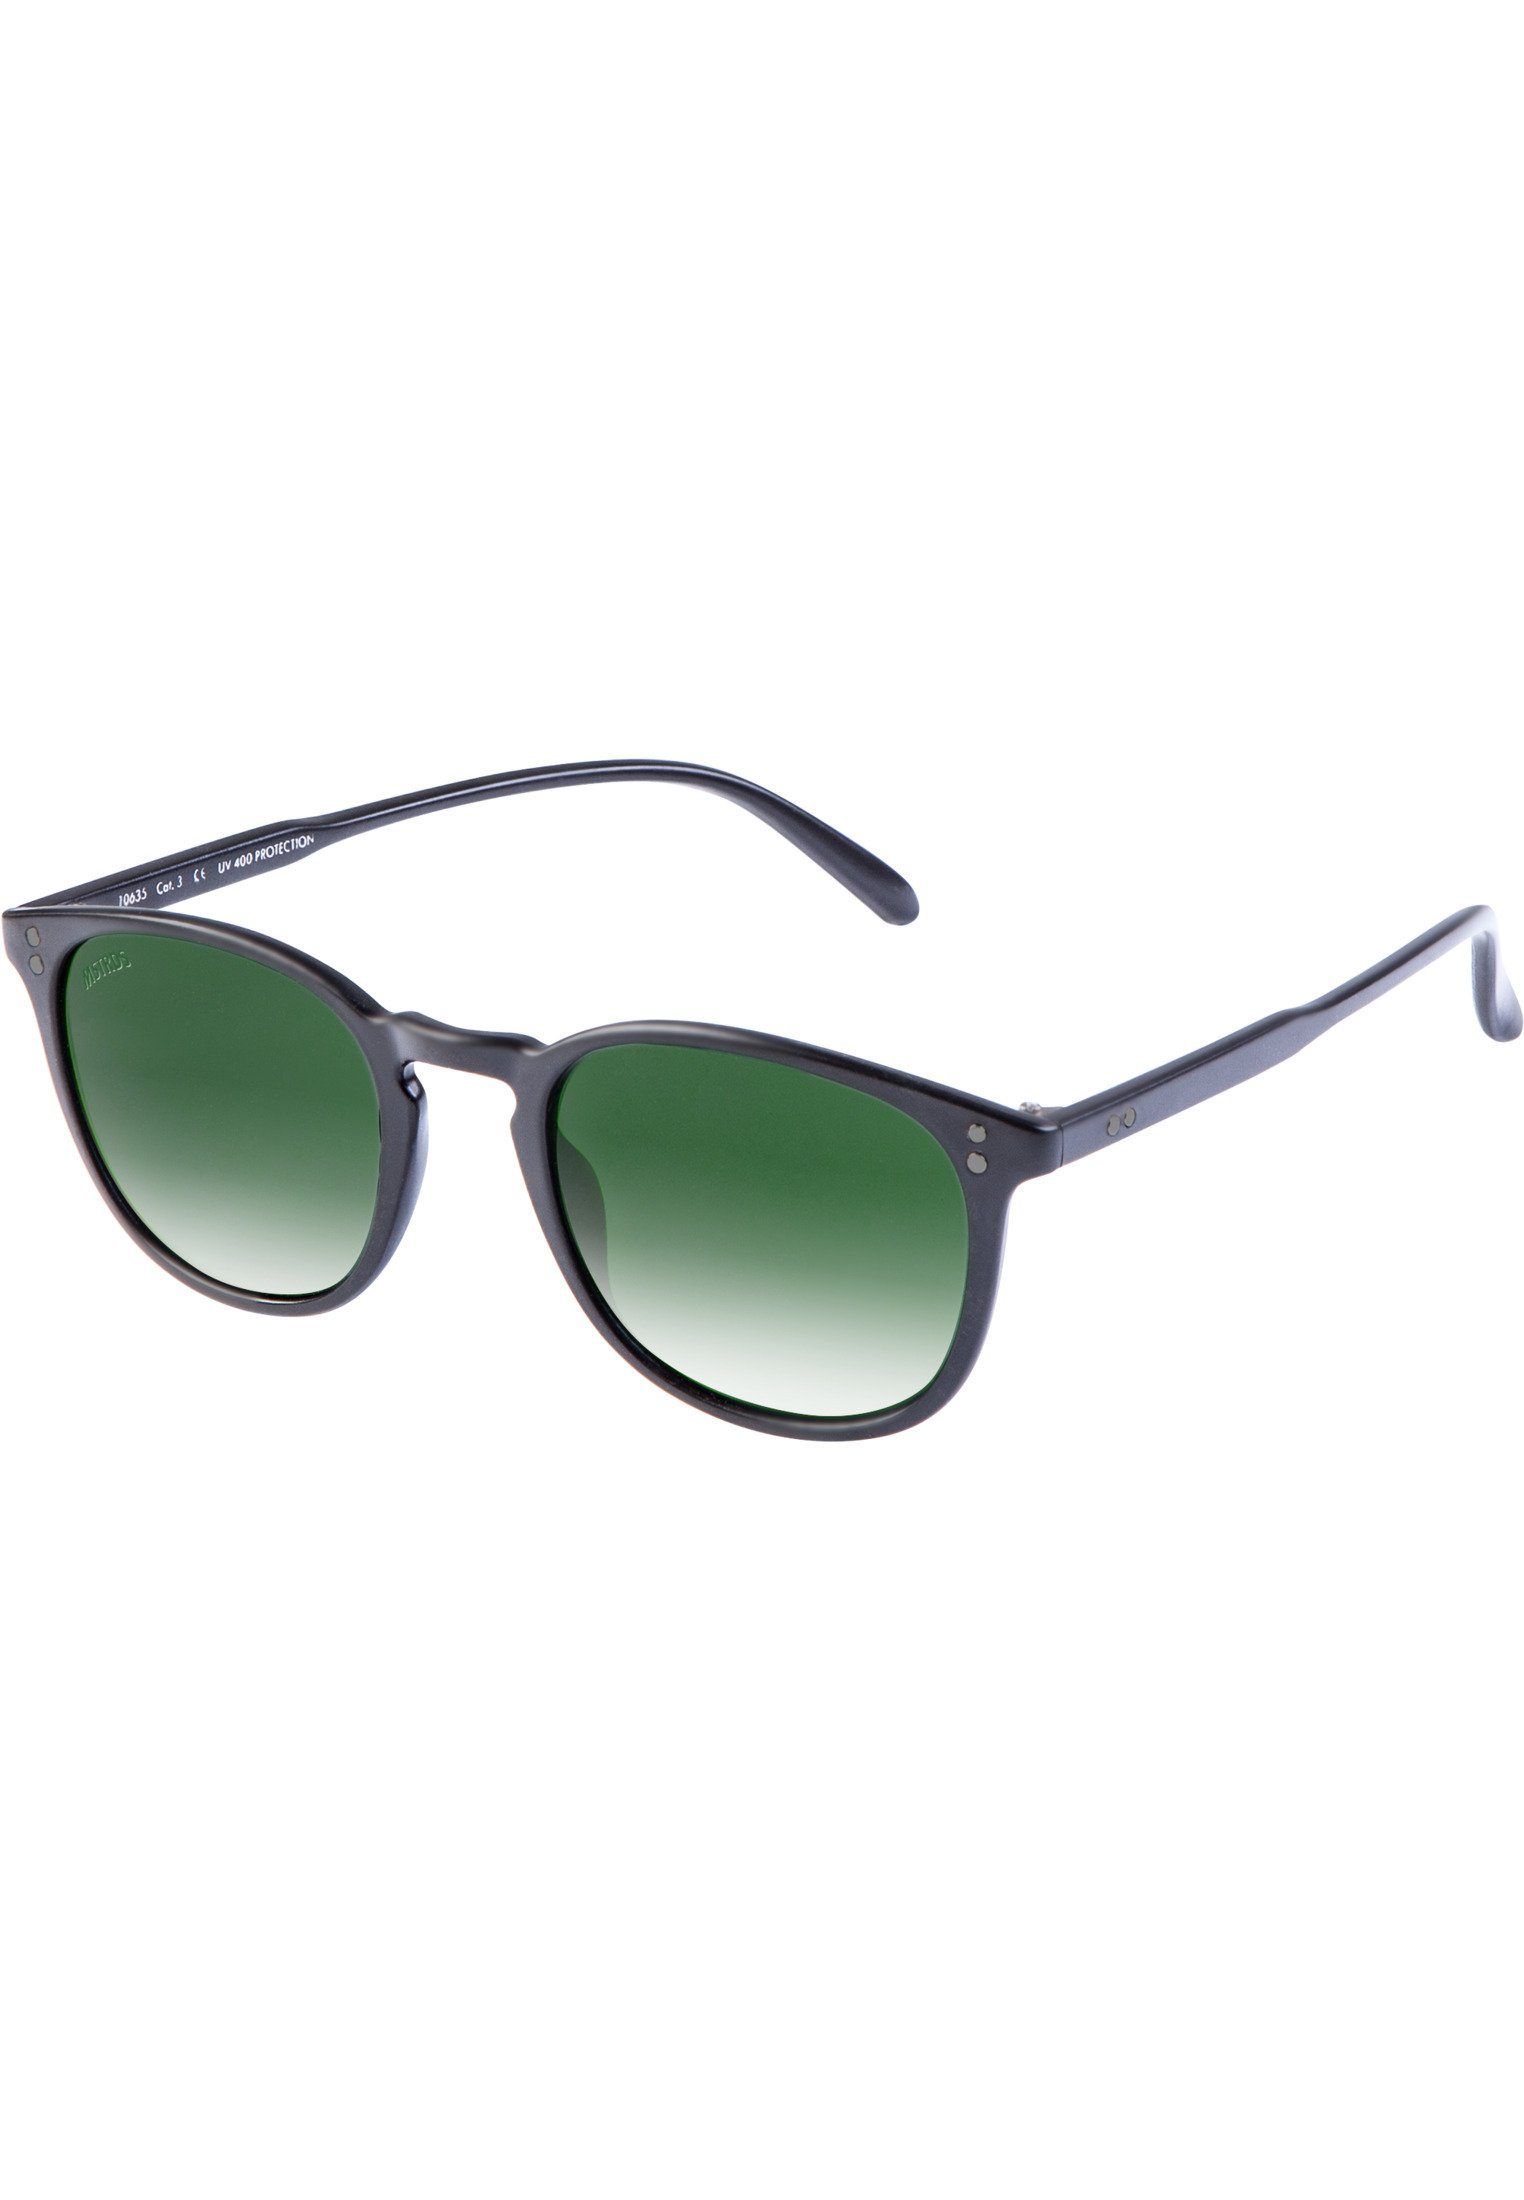 MSTRDS Sonnenbrille Accessoires Sunglasses Arthur Youth blk/grn